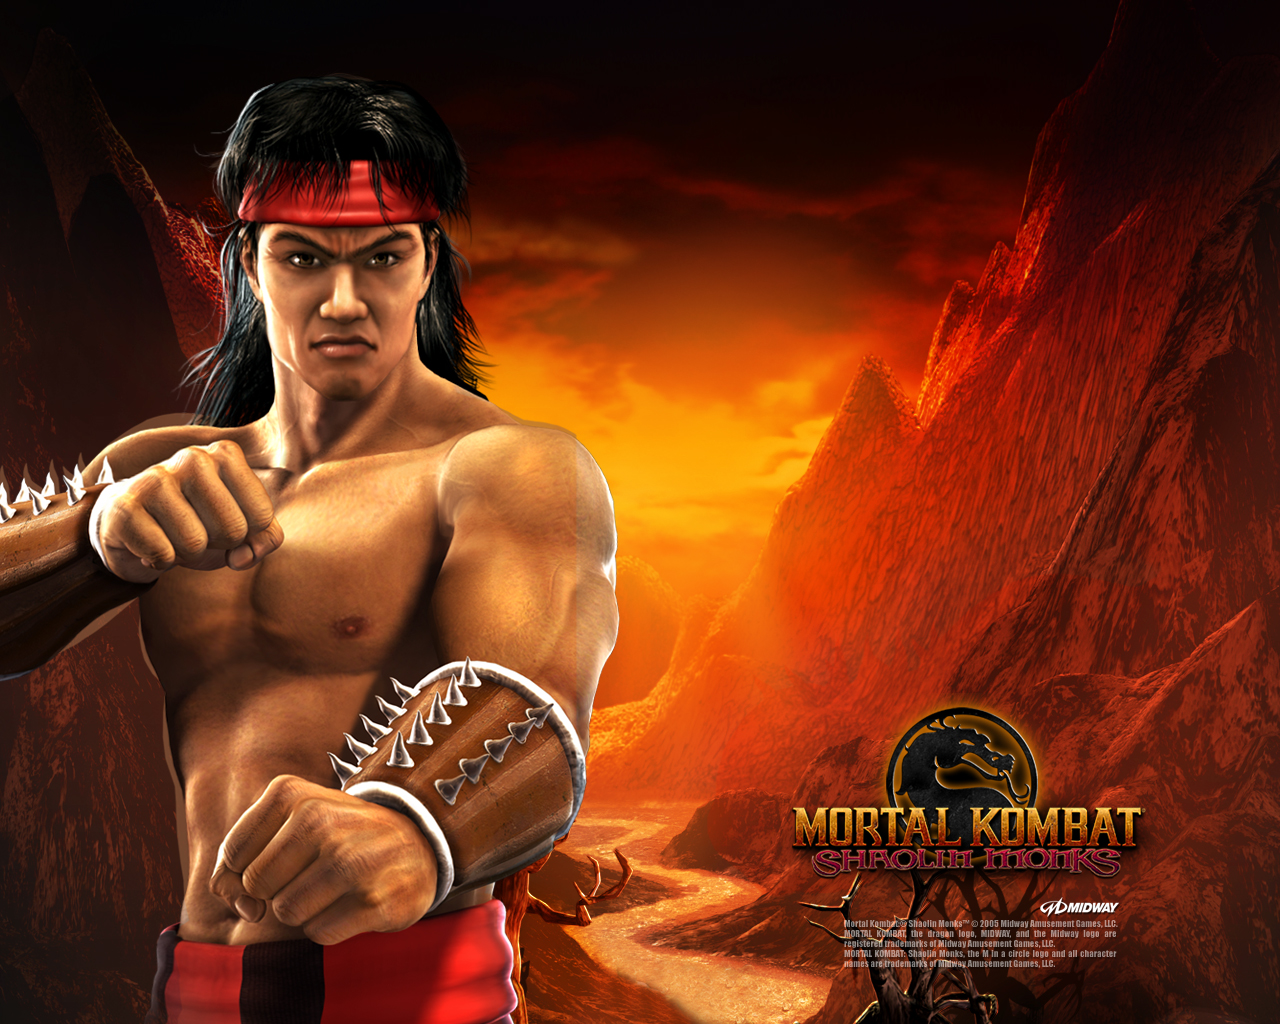 Download full size Mortal Kombat wallpaper / Games / 1280x1024